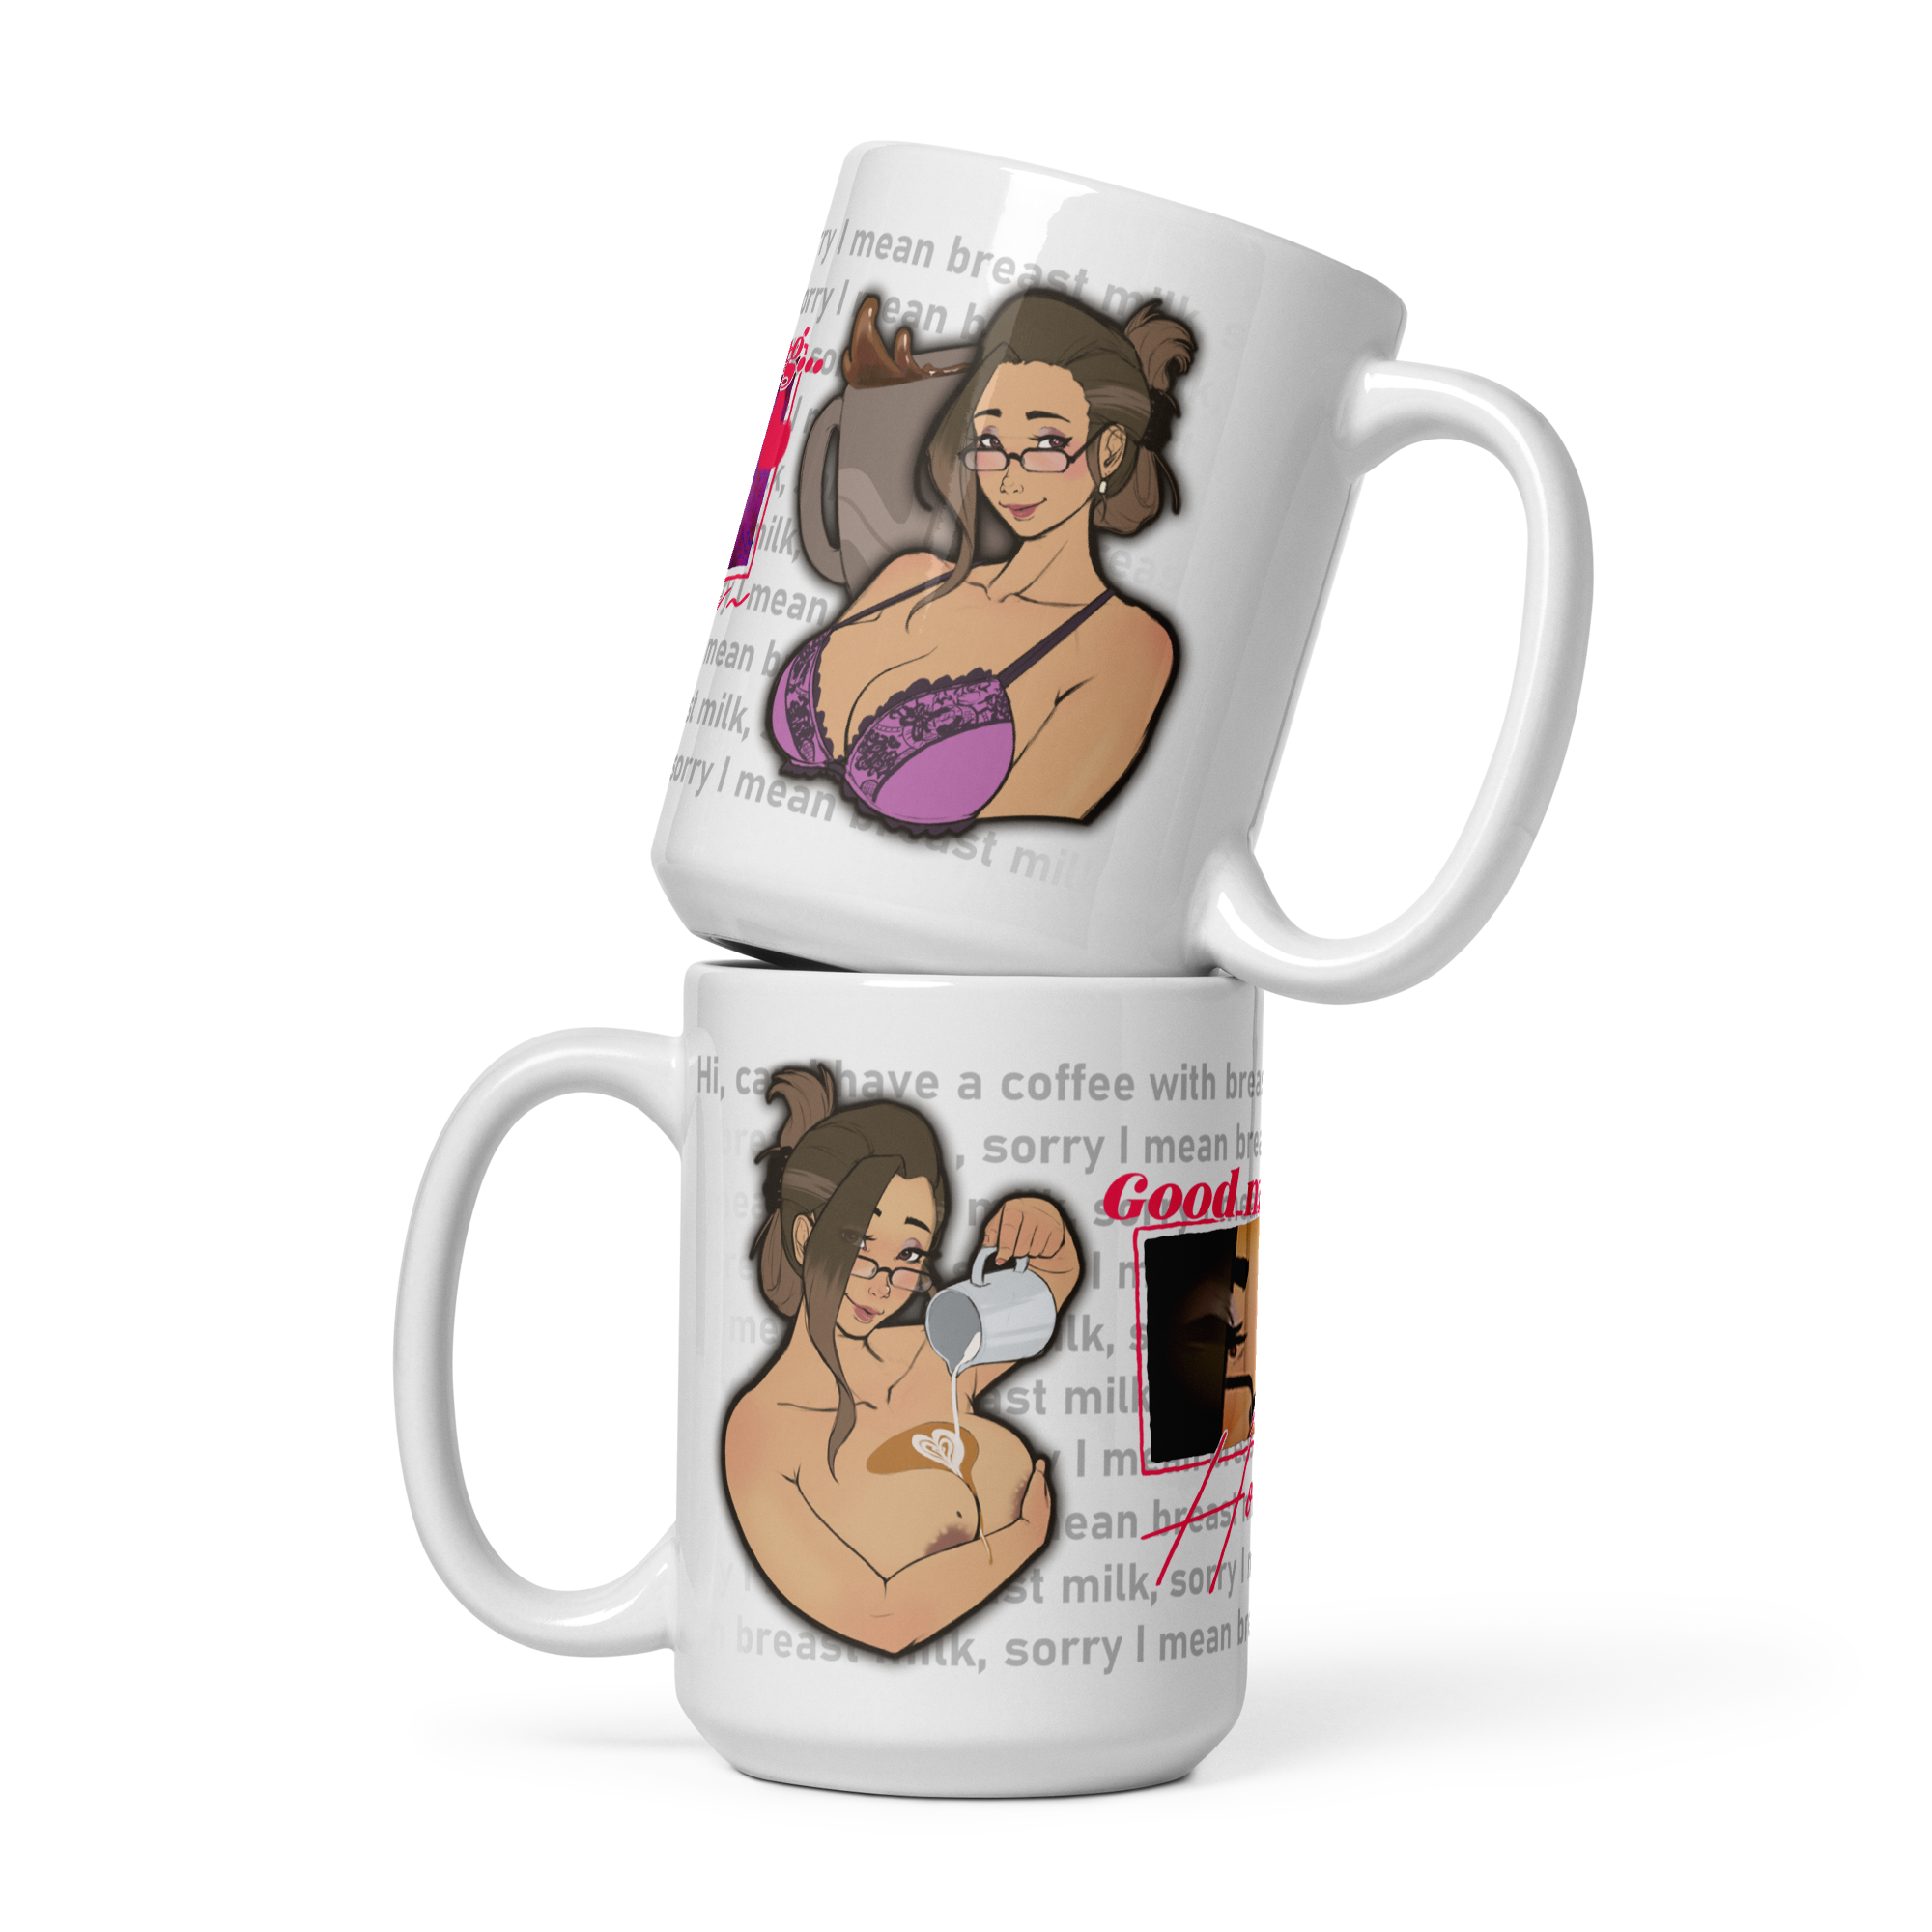 Hot Coffee mug